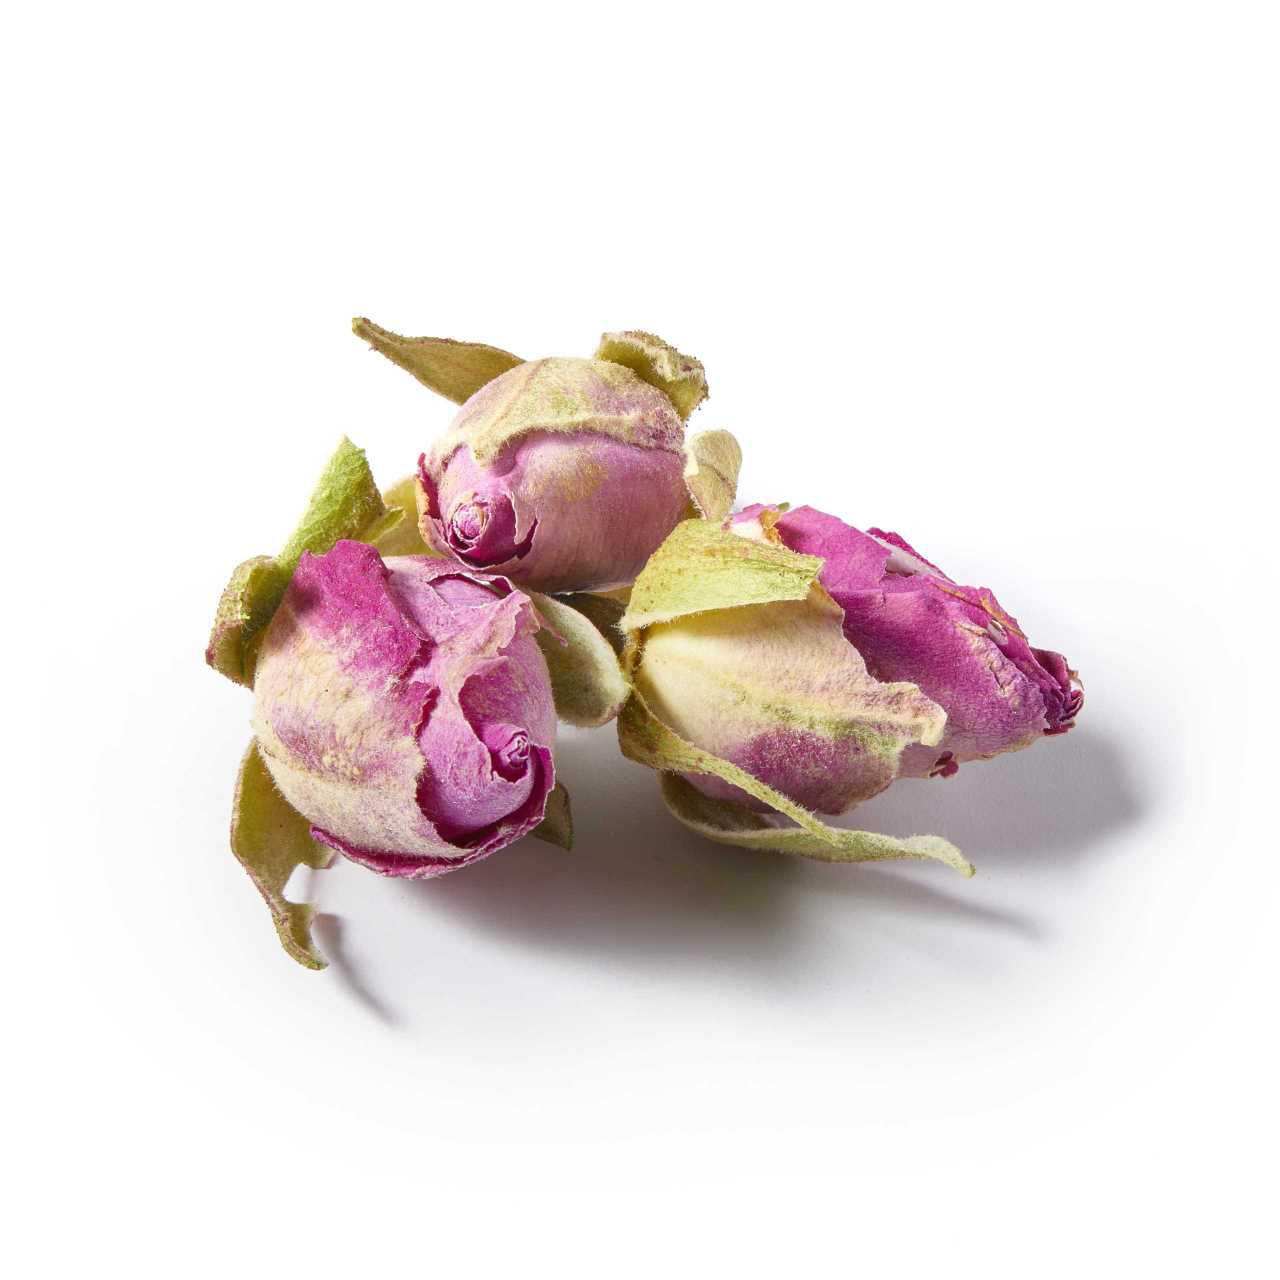 Dried Edible Whole Rose Petals | Premium Quality